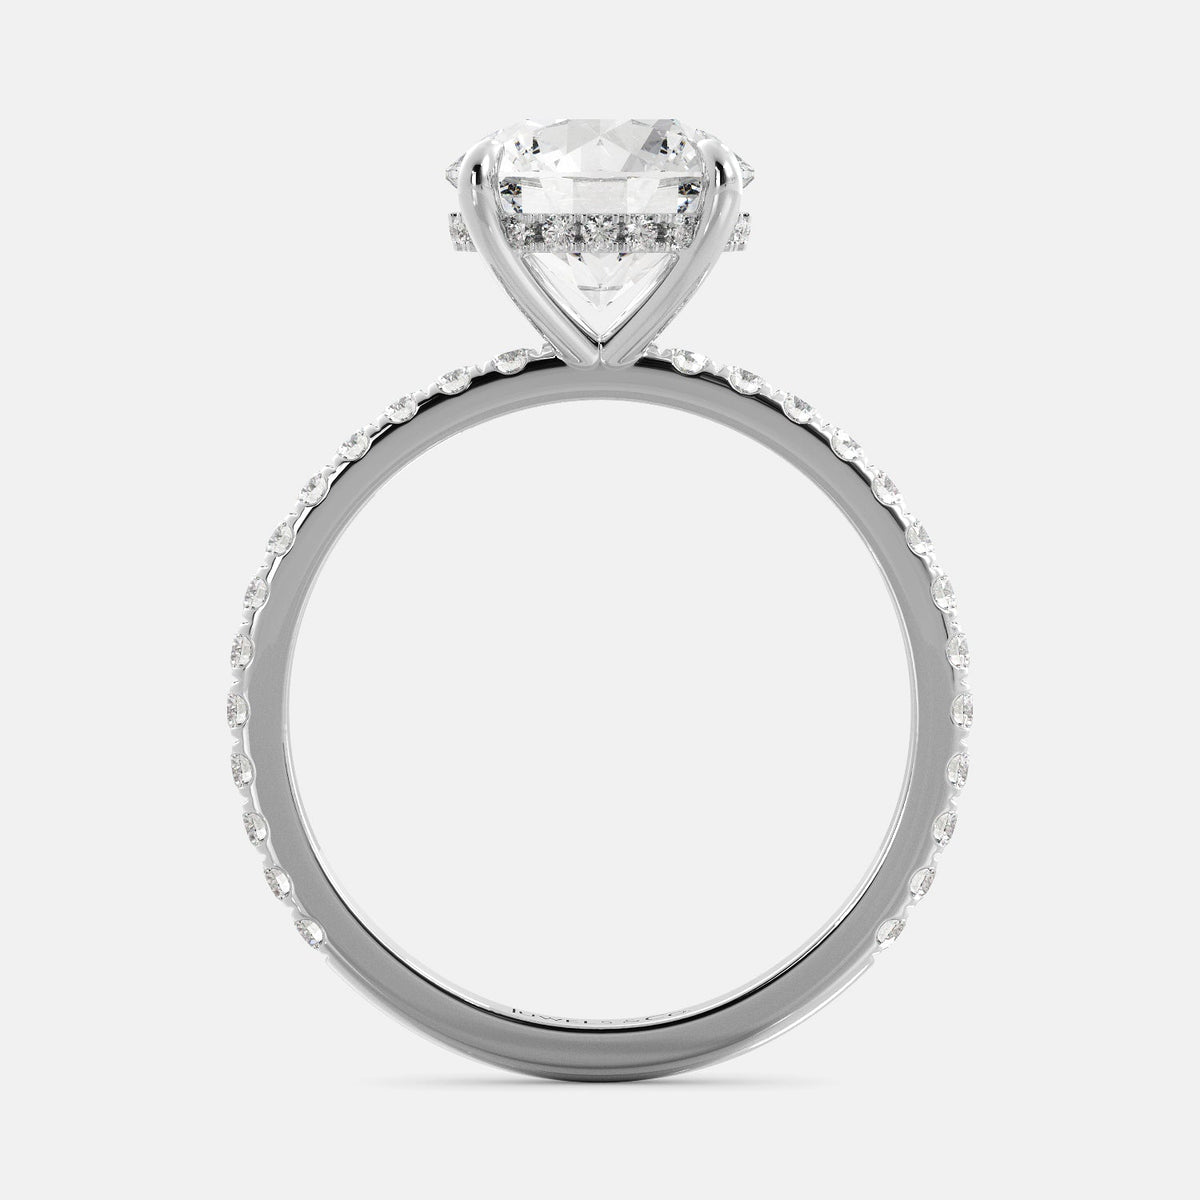 Lab-grown Round Cut Diamond with Pave Ring, 2-carat, white gold 14K